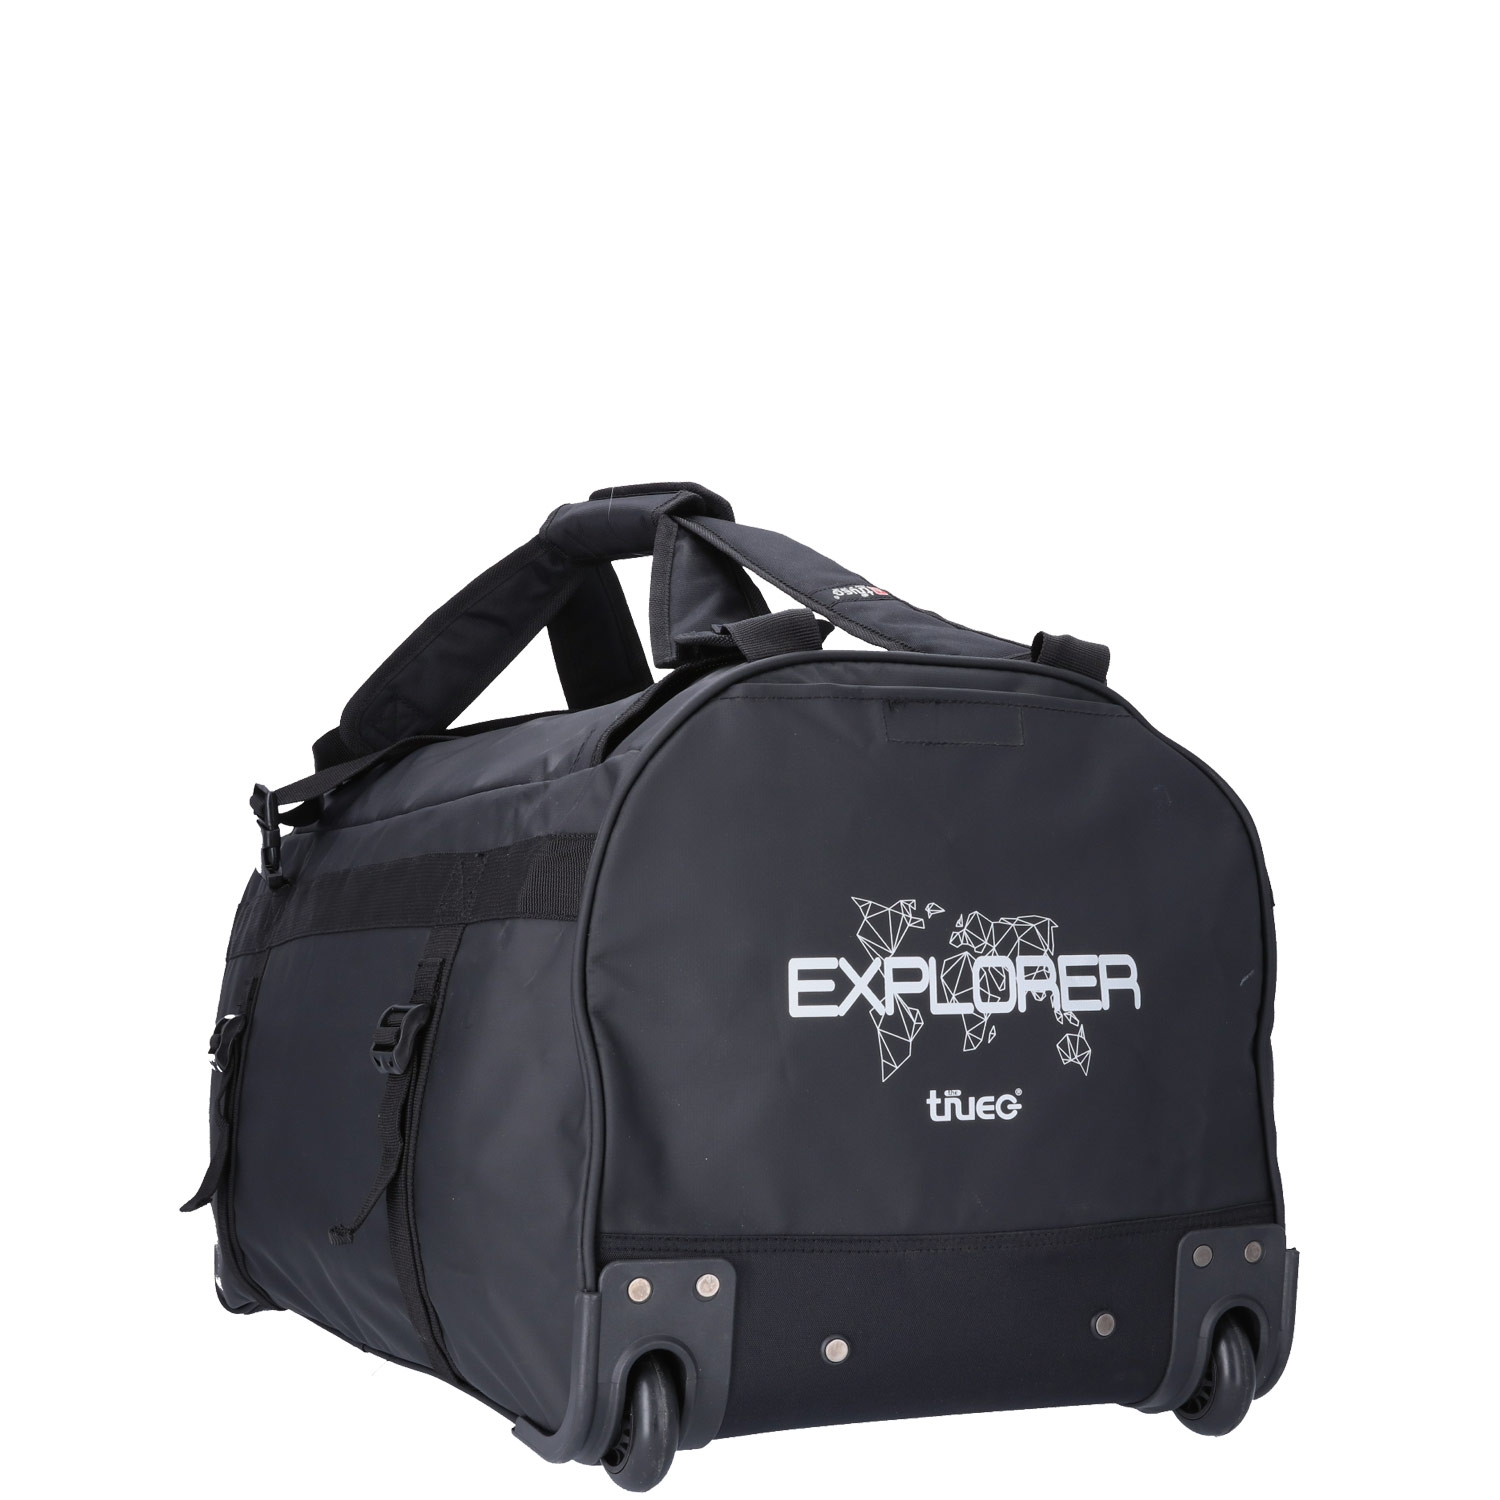 TheTrueC Trolly Bag With Wheels 66cm Explore Explorer schwarz